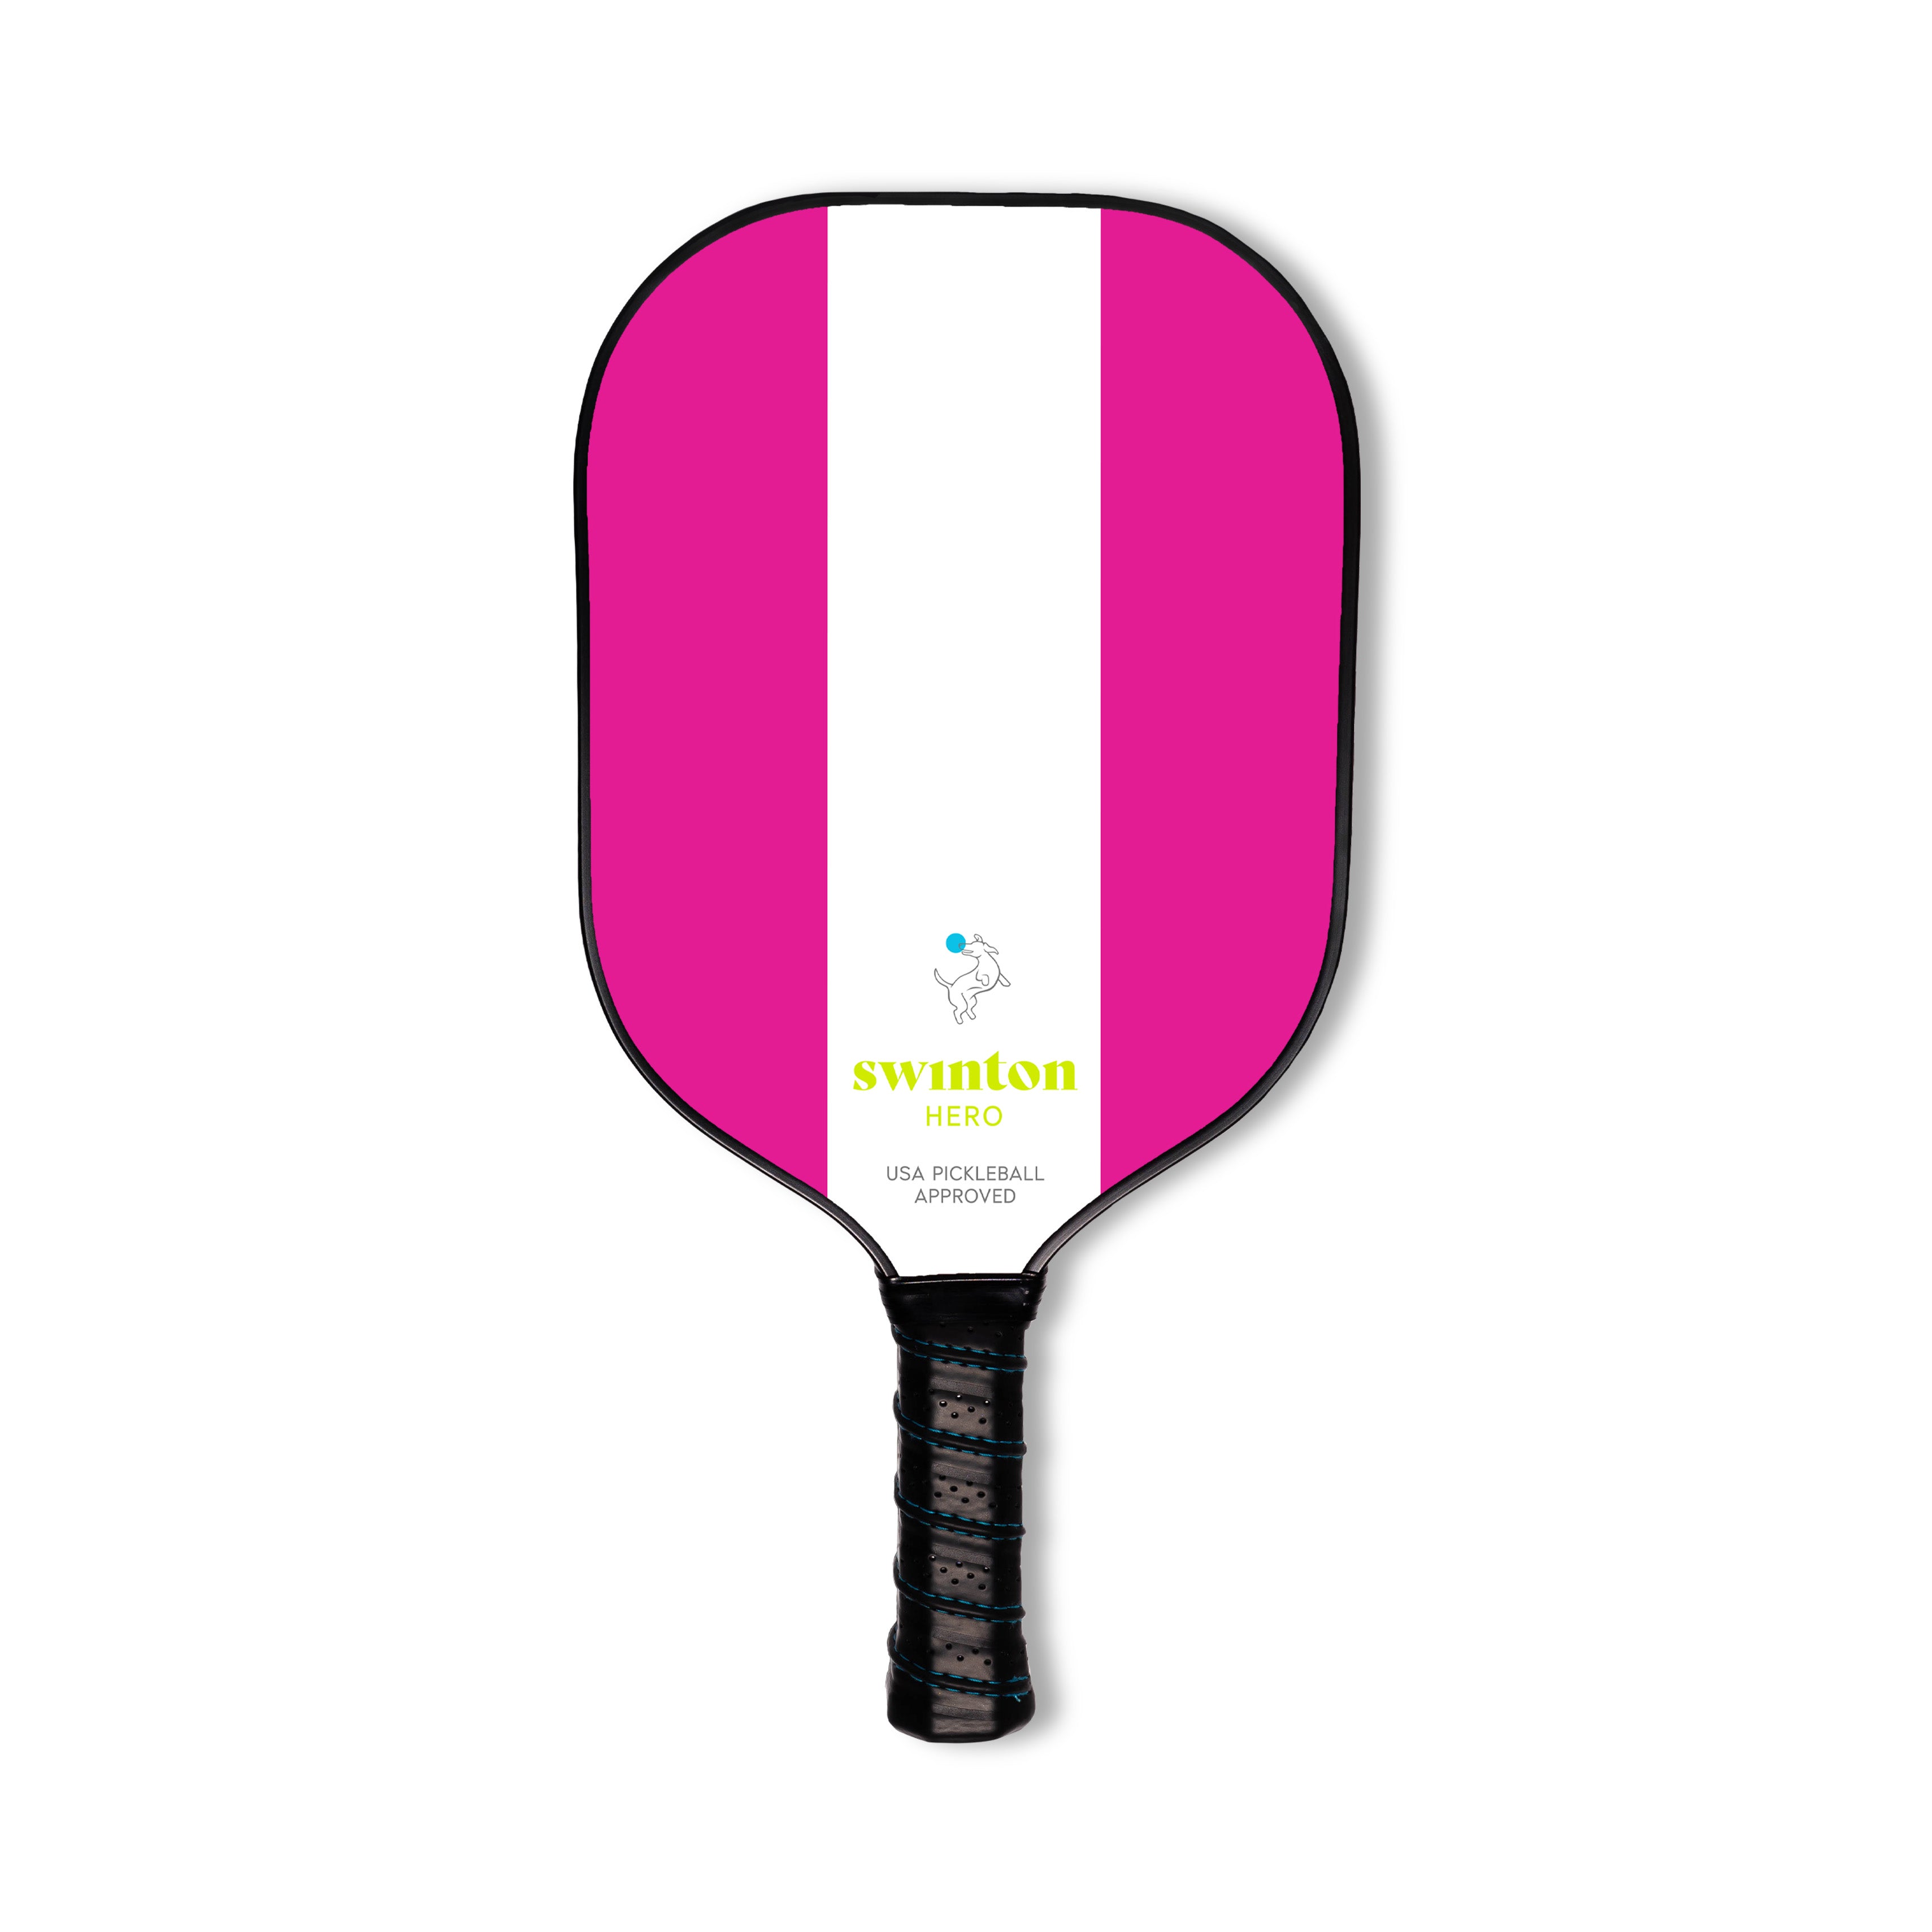 pink chanel tennis racket